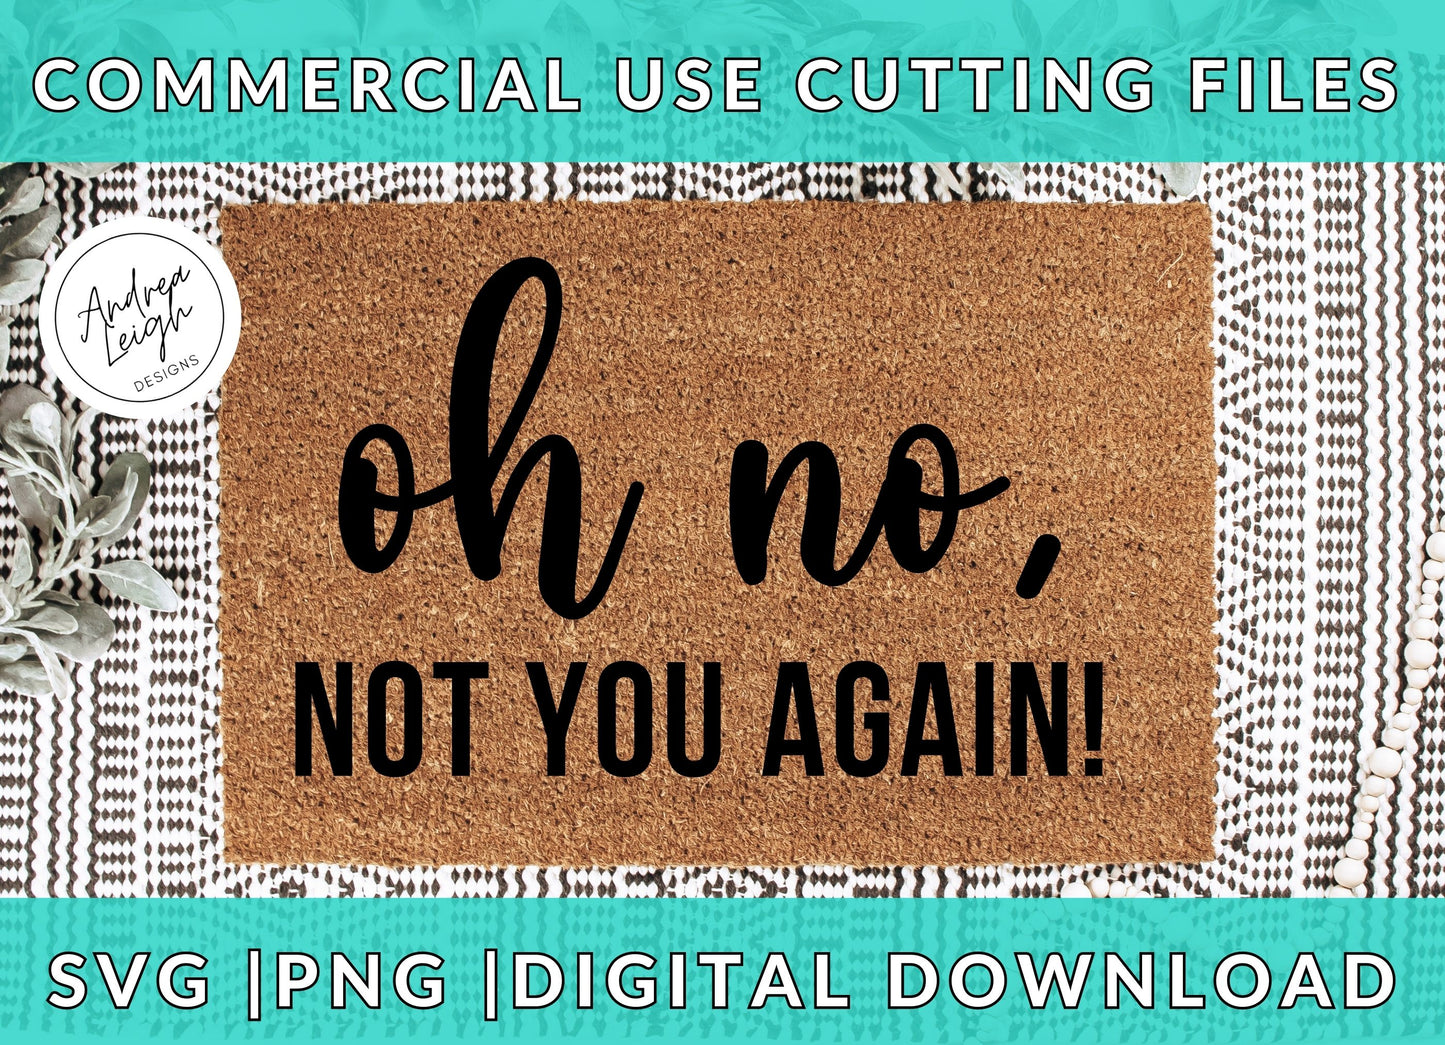 Oh No! Doormat Digital Download